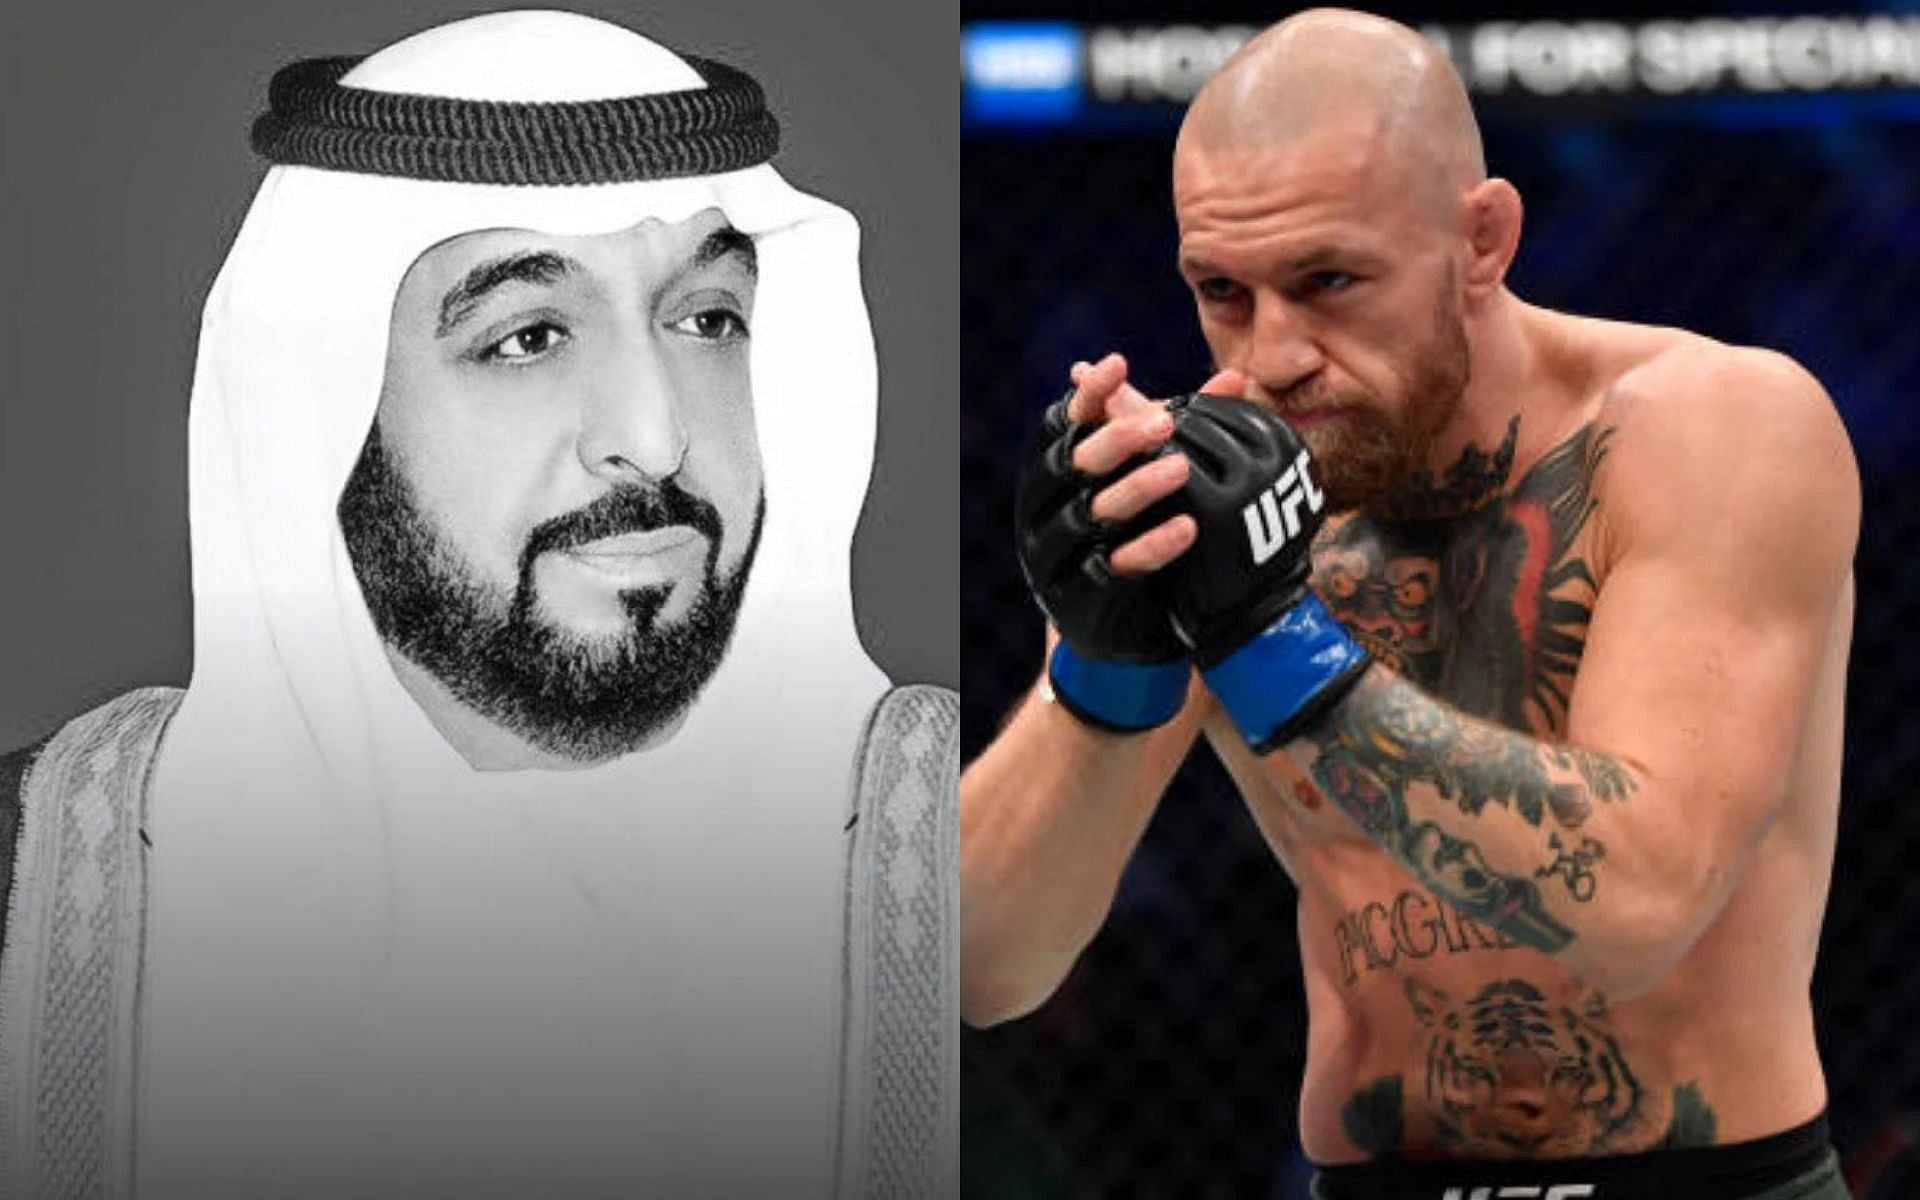 Sheikh Khalifa bin Zayed Al Nahyan (left) and Conor McGregor (right) [Left image courtesy @khaleejtimes via Twitter]